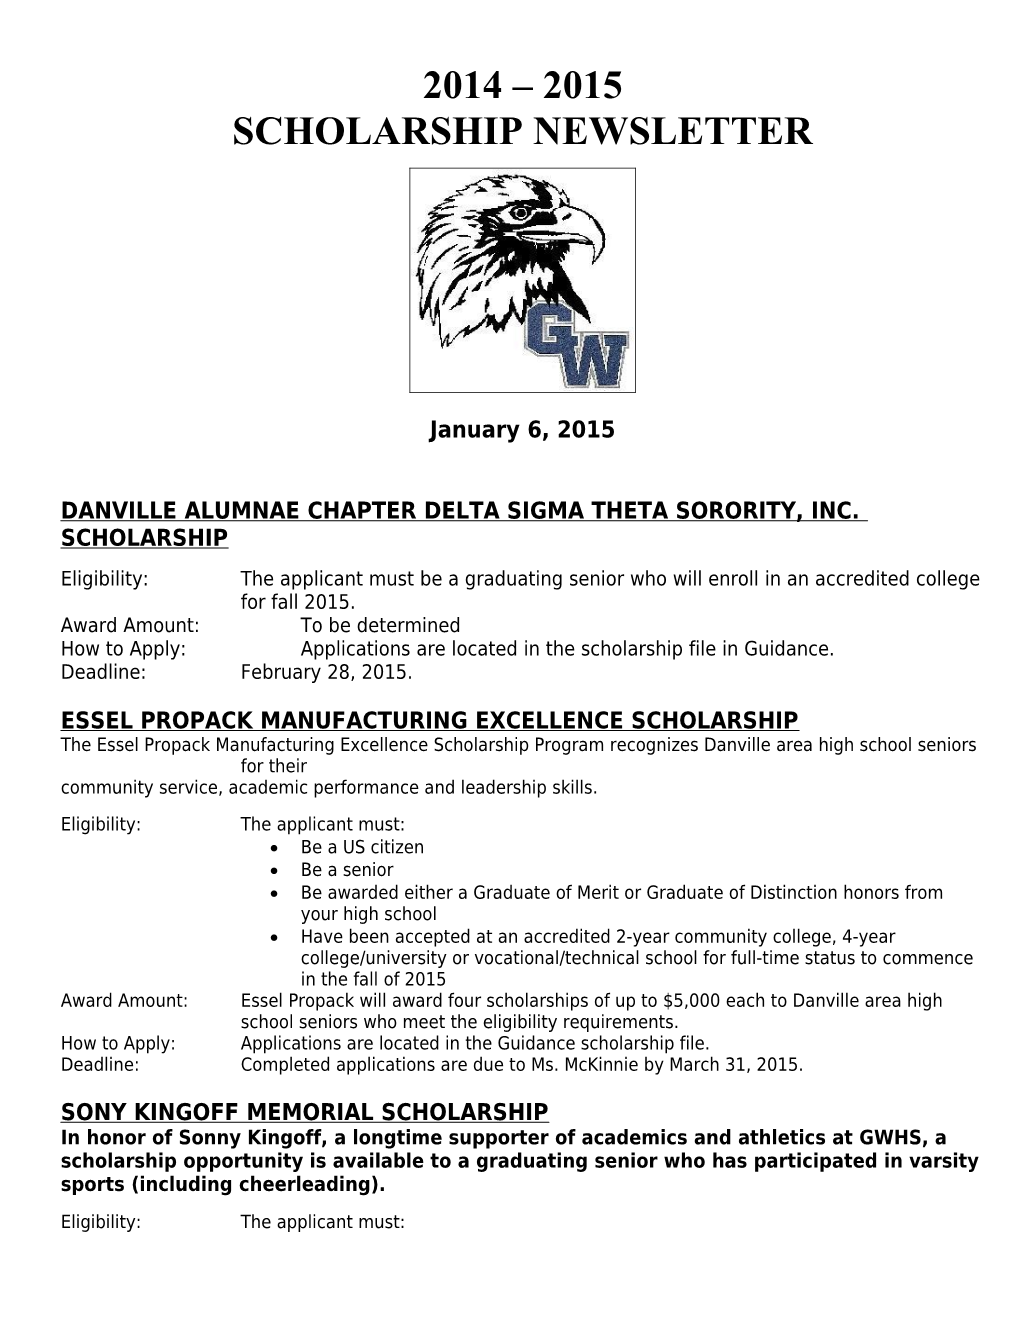 Danville Alumnae Chapter Delta Sigma Theta Sorority, Inc. Scholarship